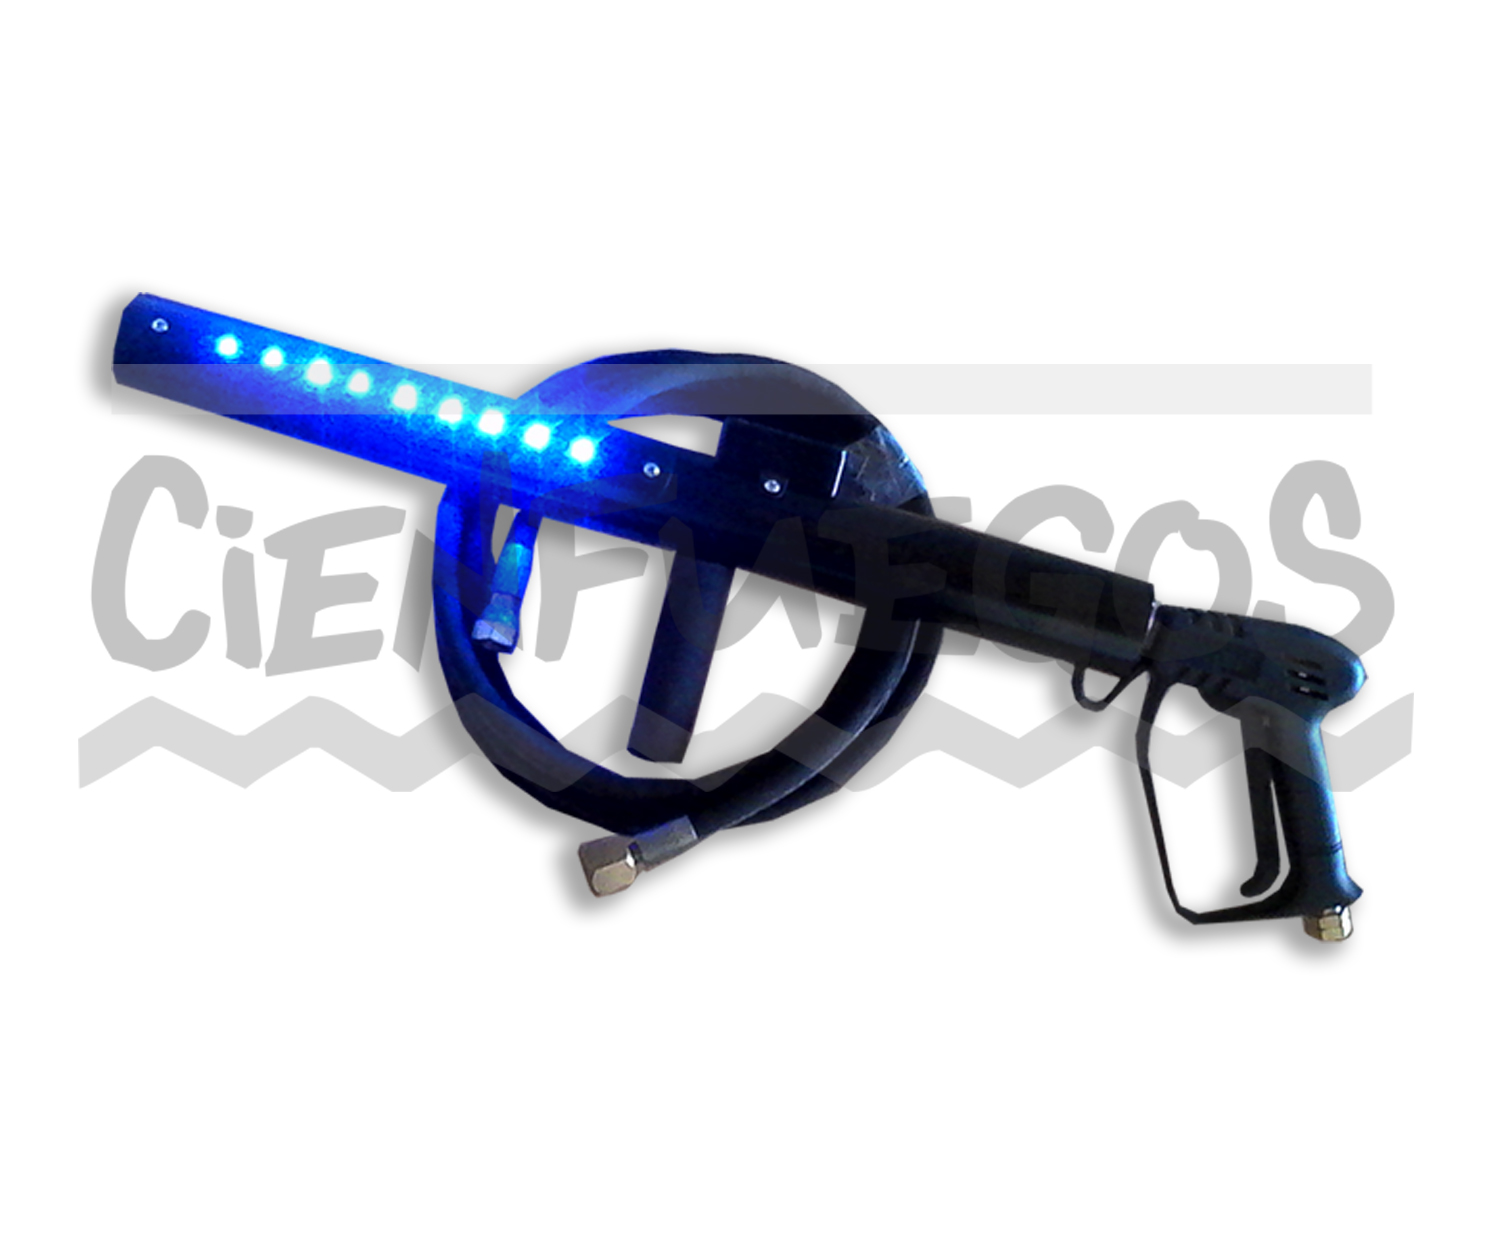 Pistola de C02 JET CON LED (Manguera Incluida de 4 mtrs)